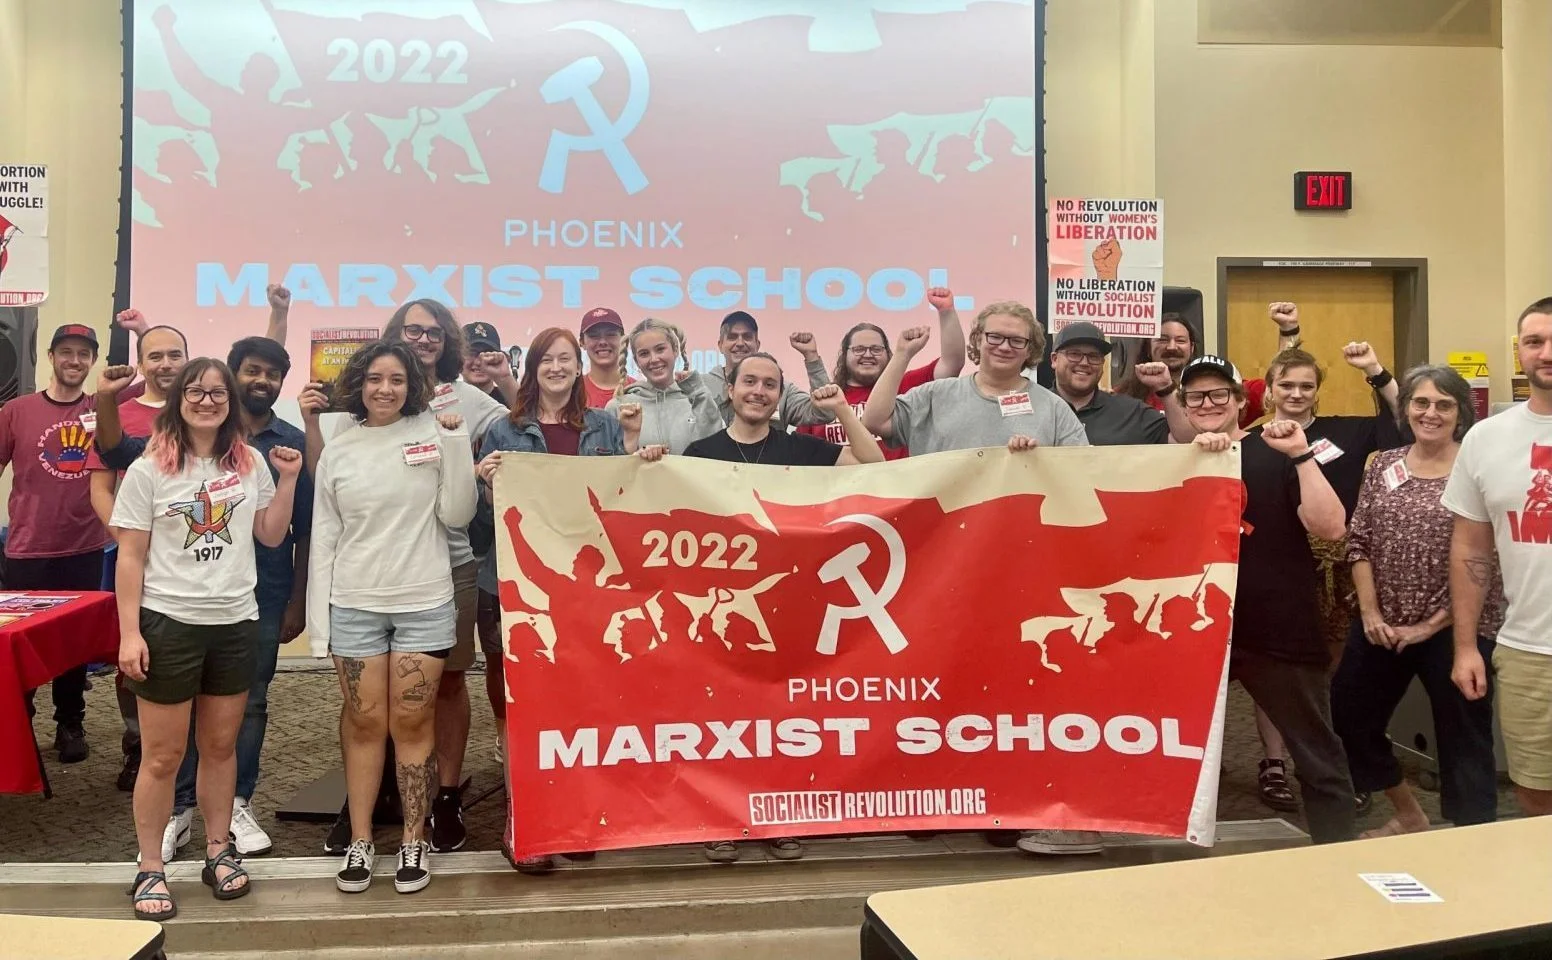 phoenix marxist school Image Socialist Revolution